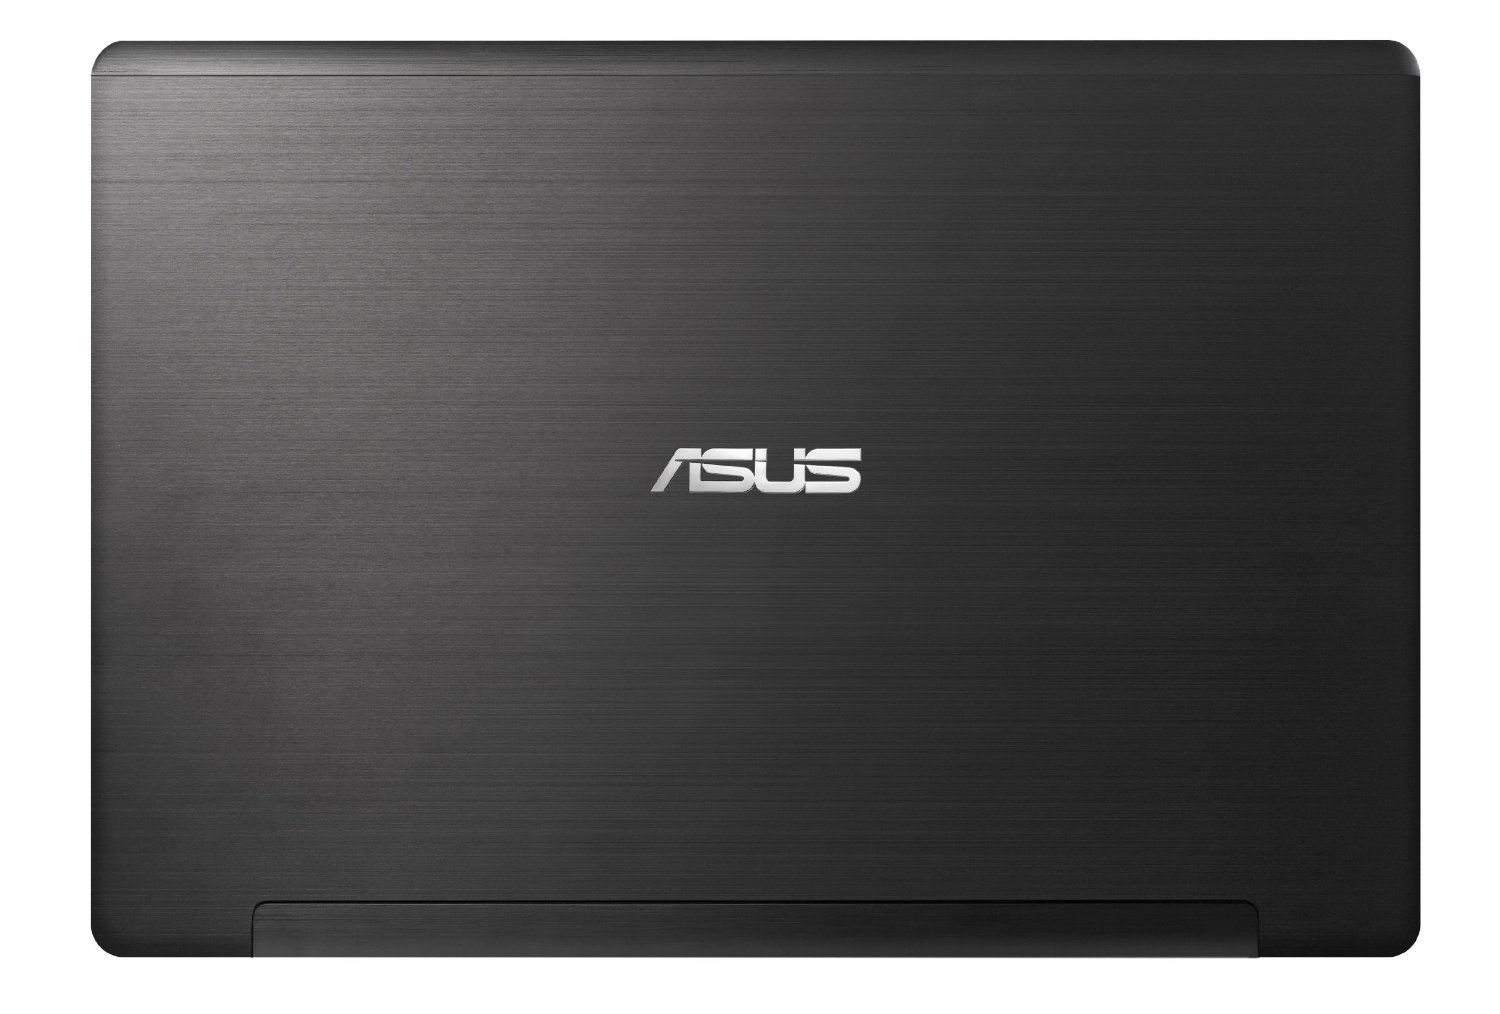 Asus VivoBook S550CA-DS51T